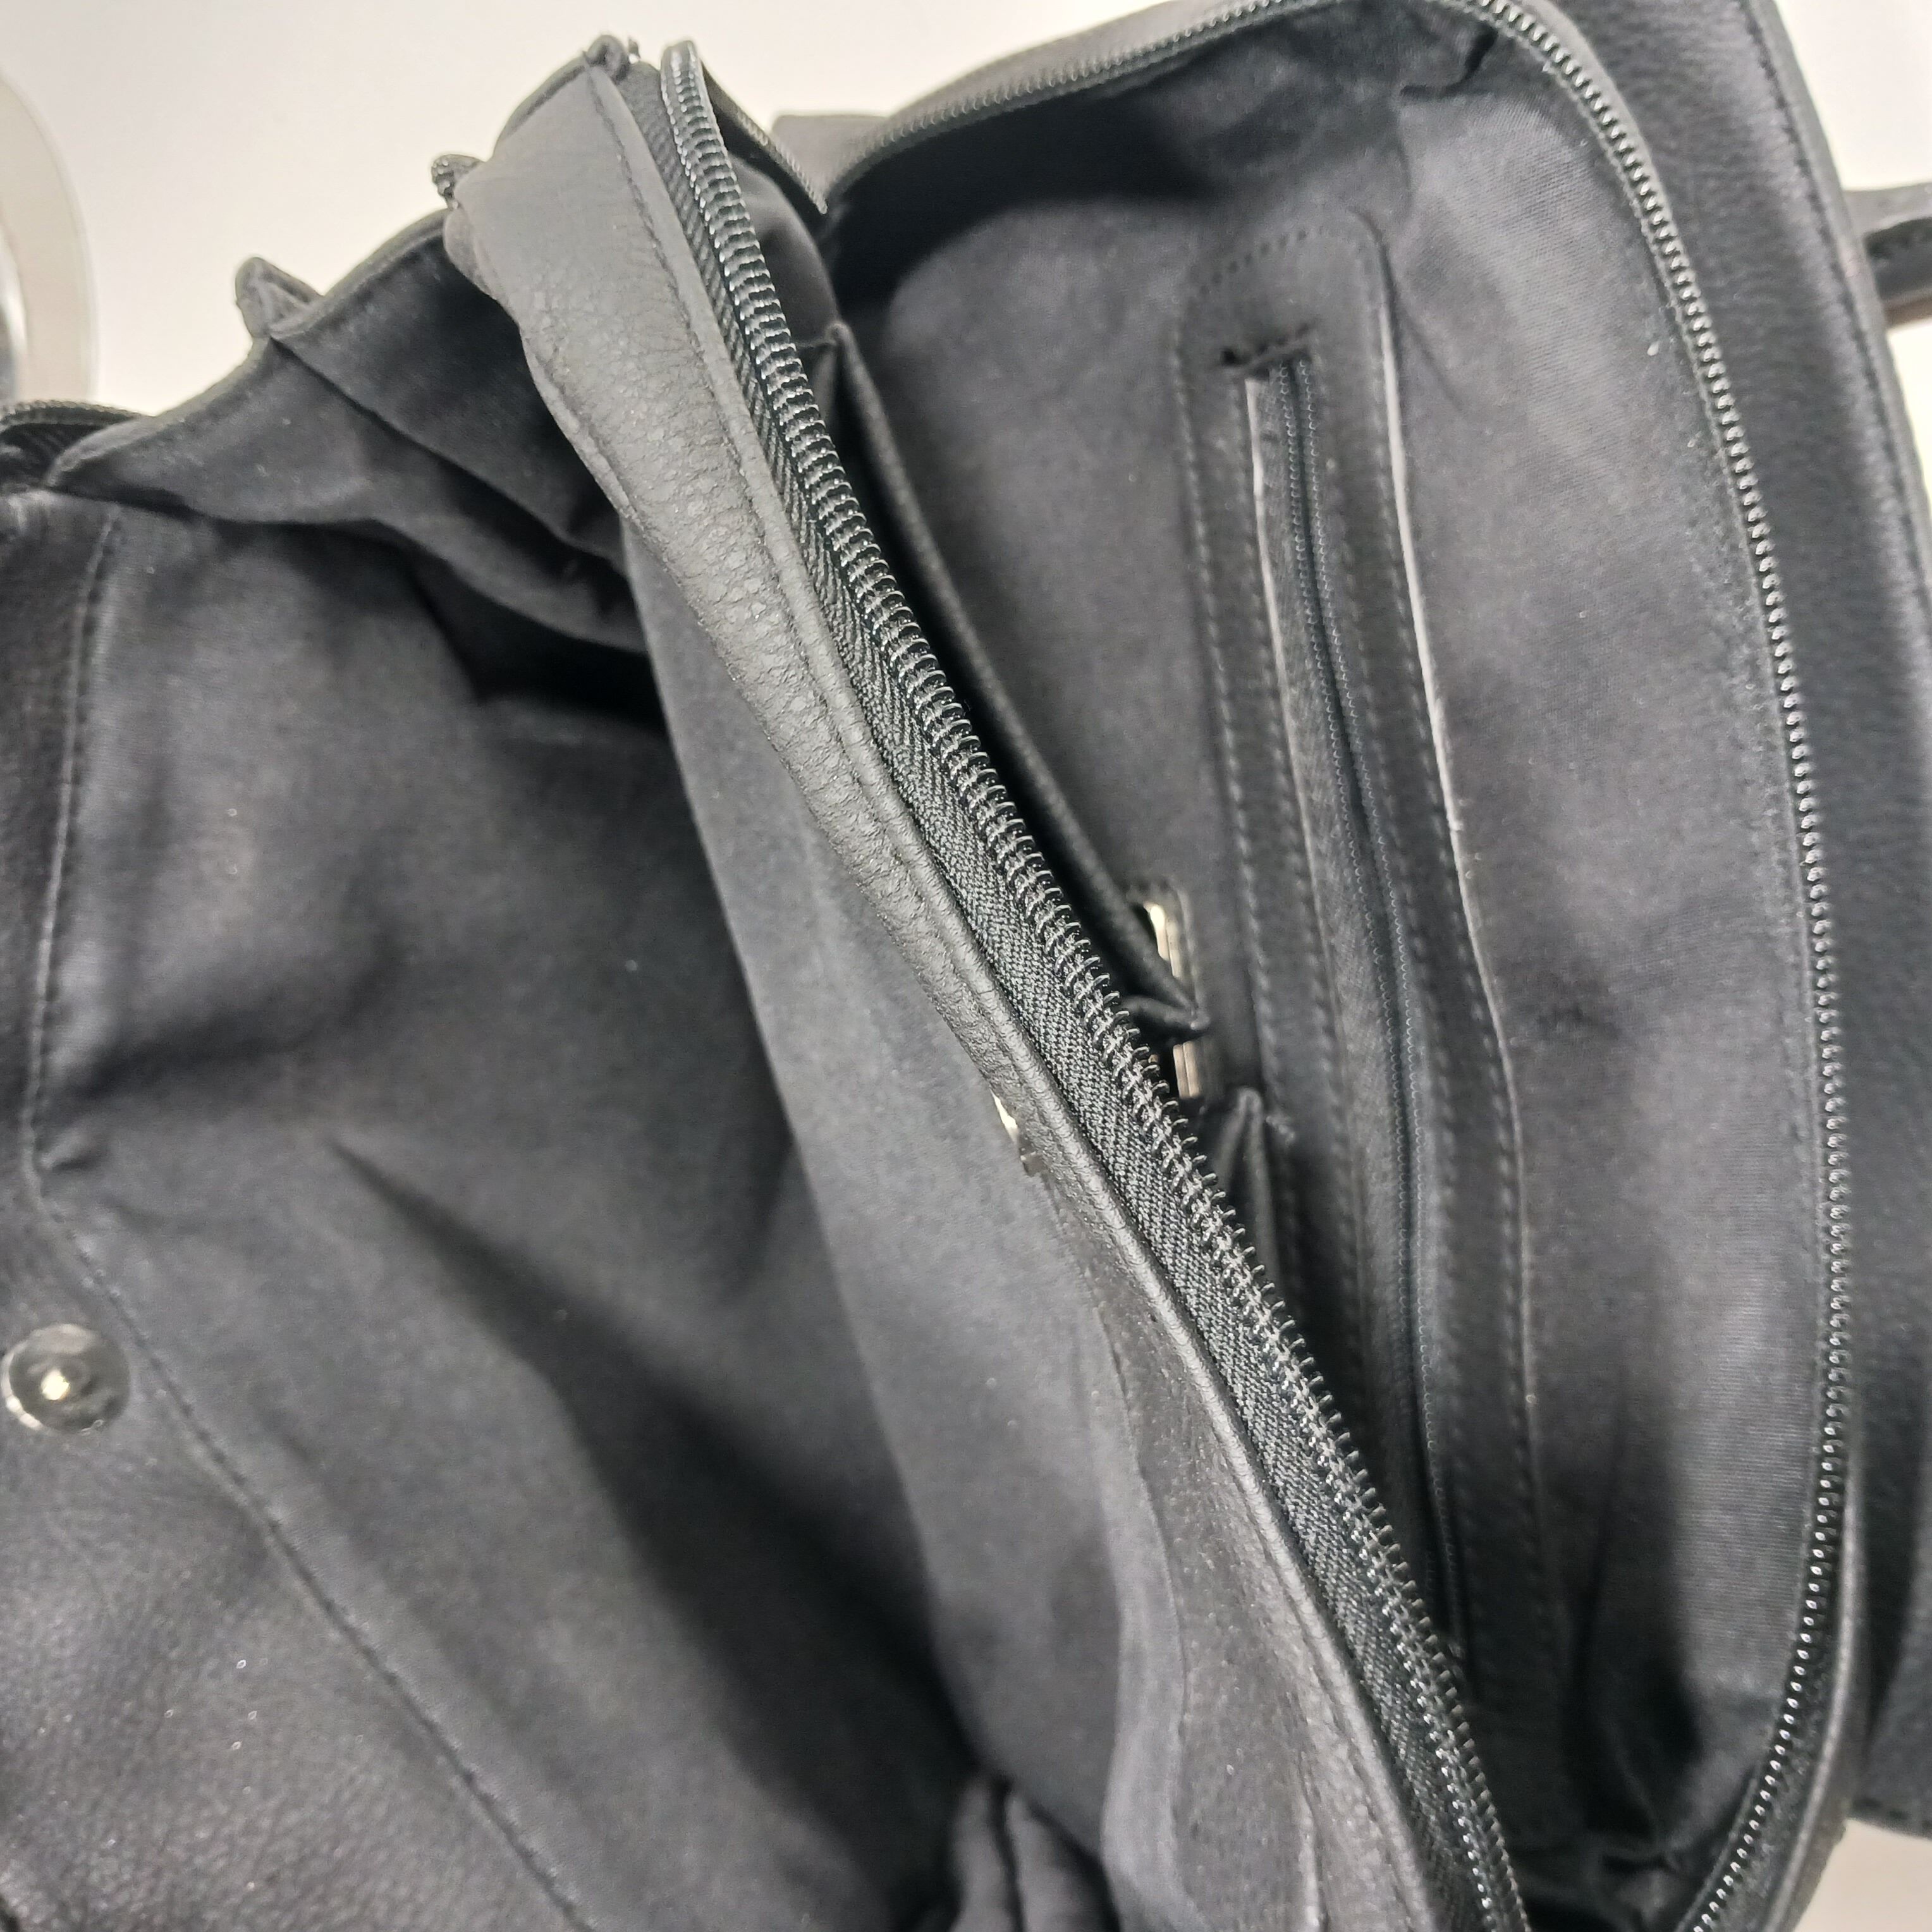 Rosetti Handbag Purse Dark Brown Faux Leather Pockets | eBay